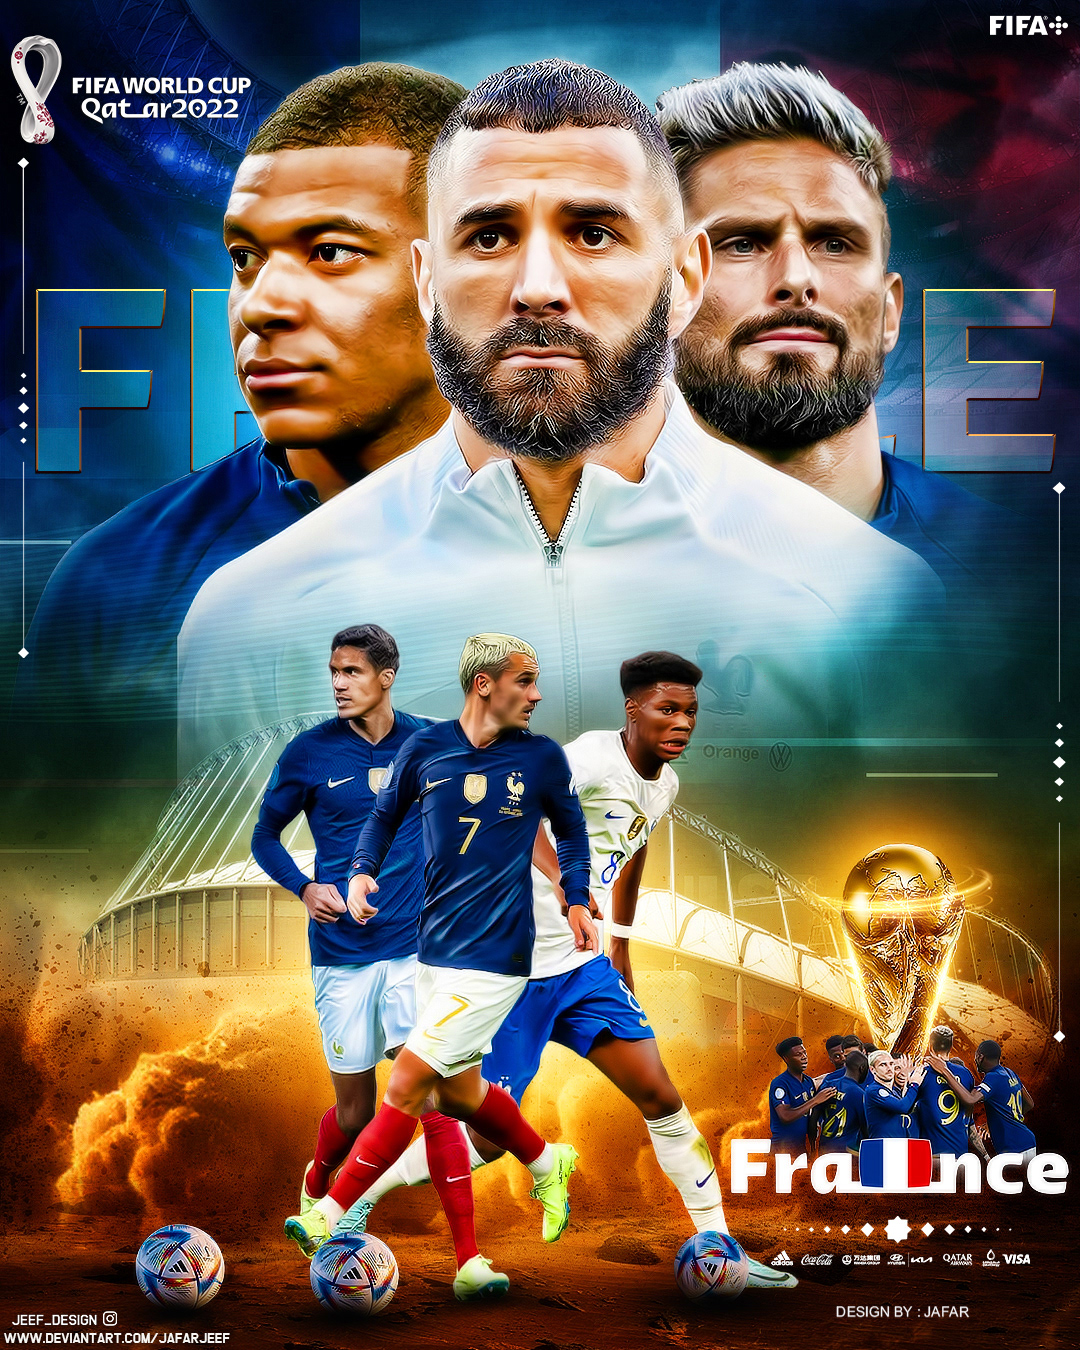 WORLD CUP 2022 wallpaper